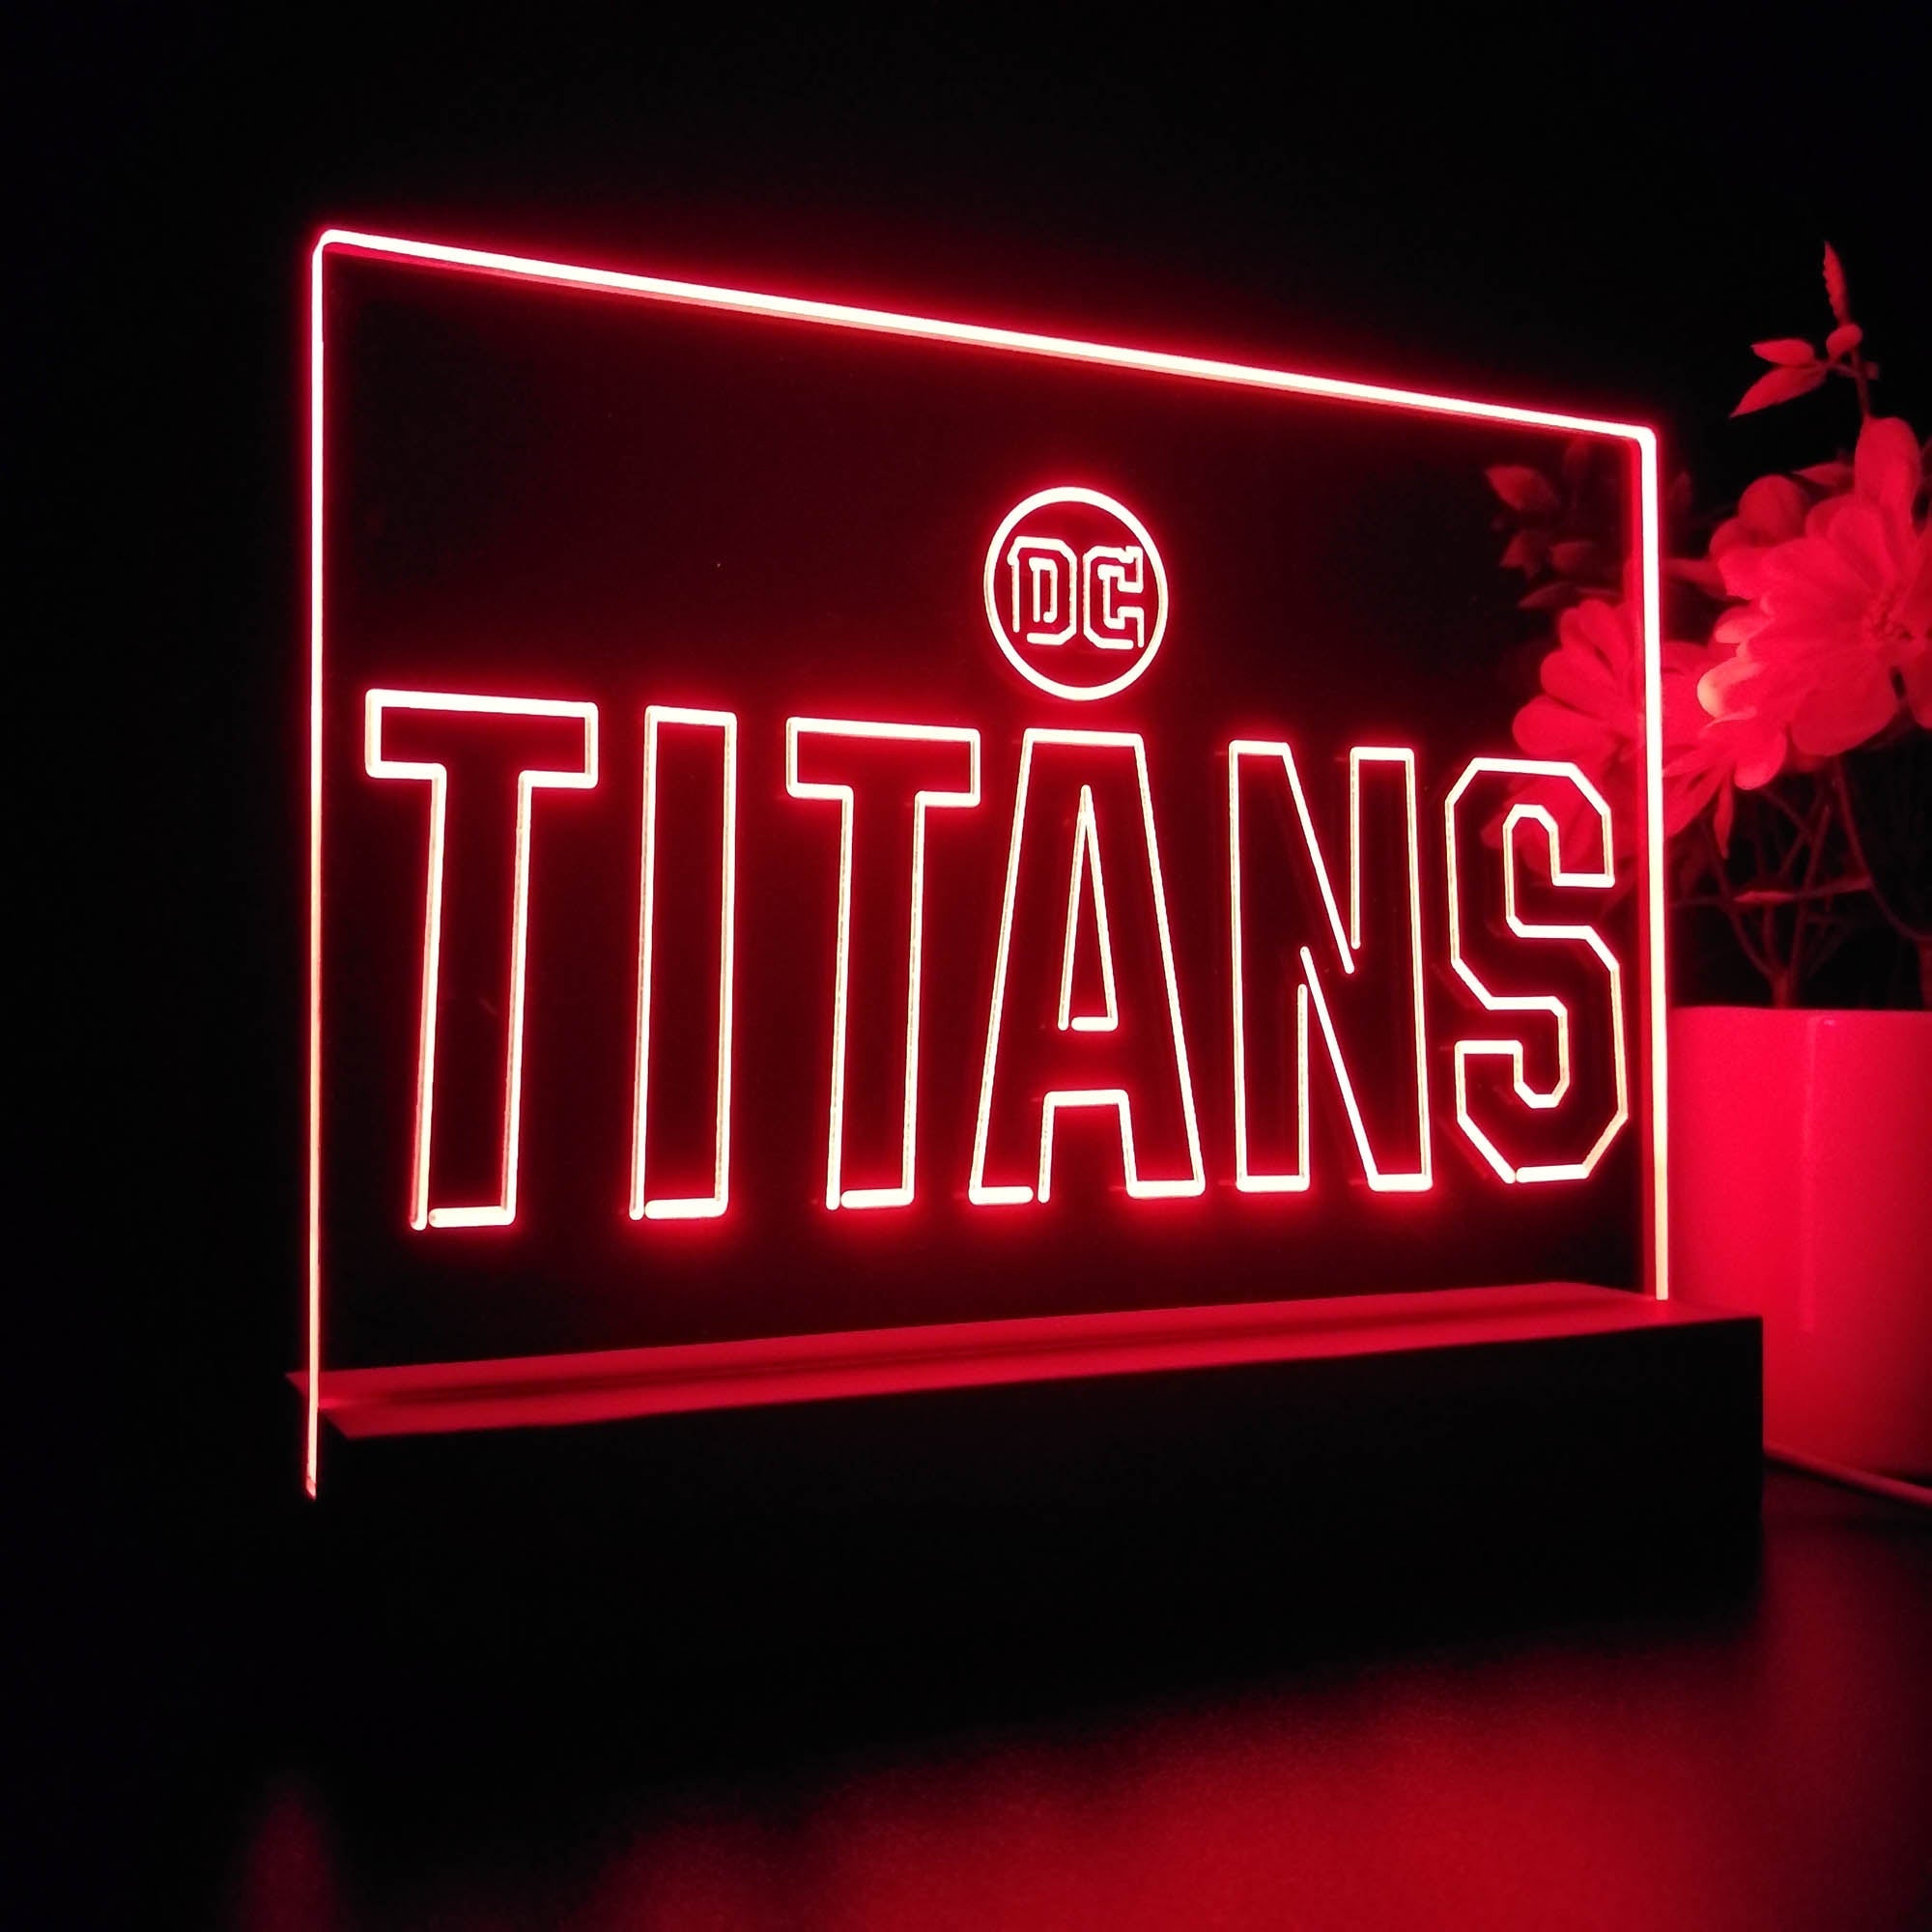 Titans 3D Illusion Night Light Desk Lamp